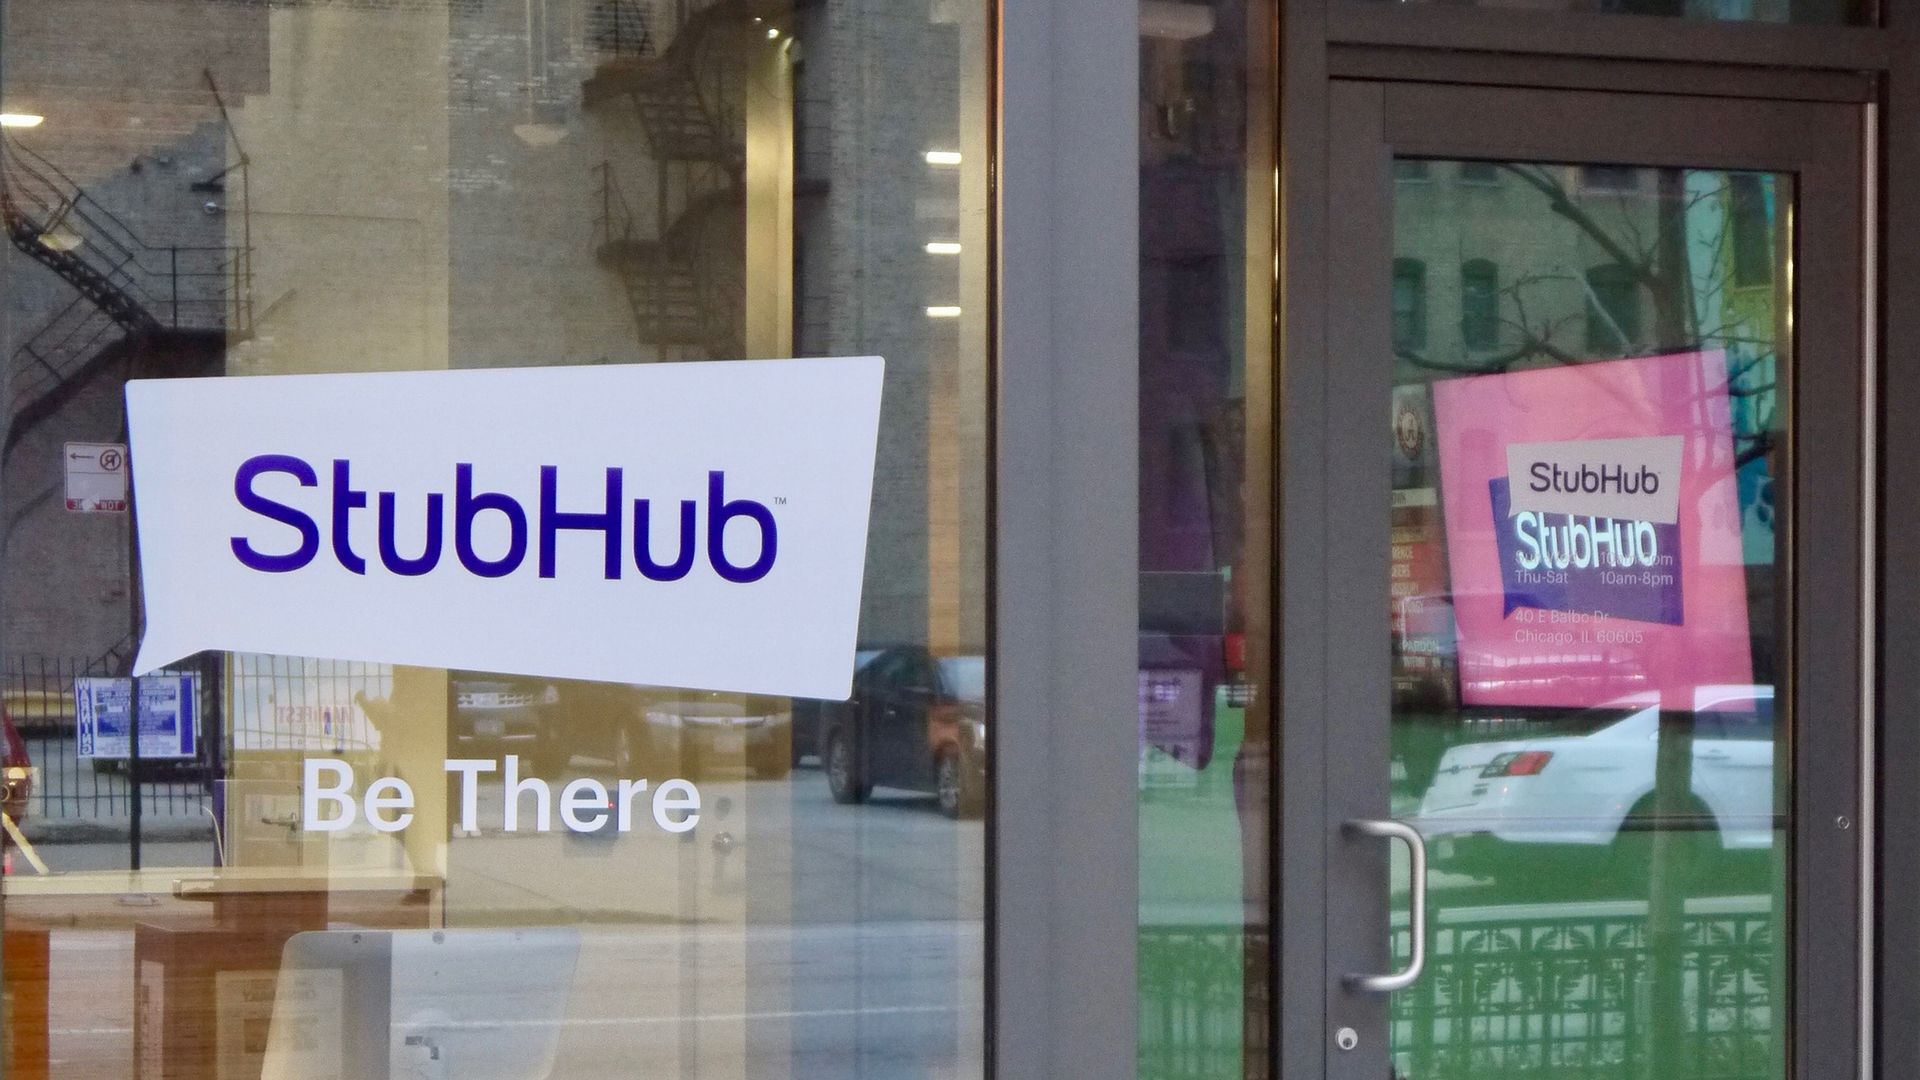 StubHub's logo